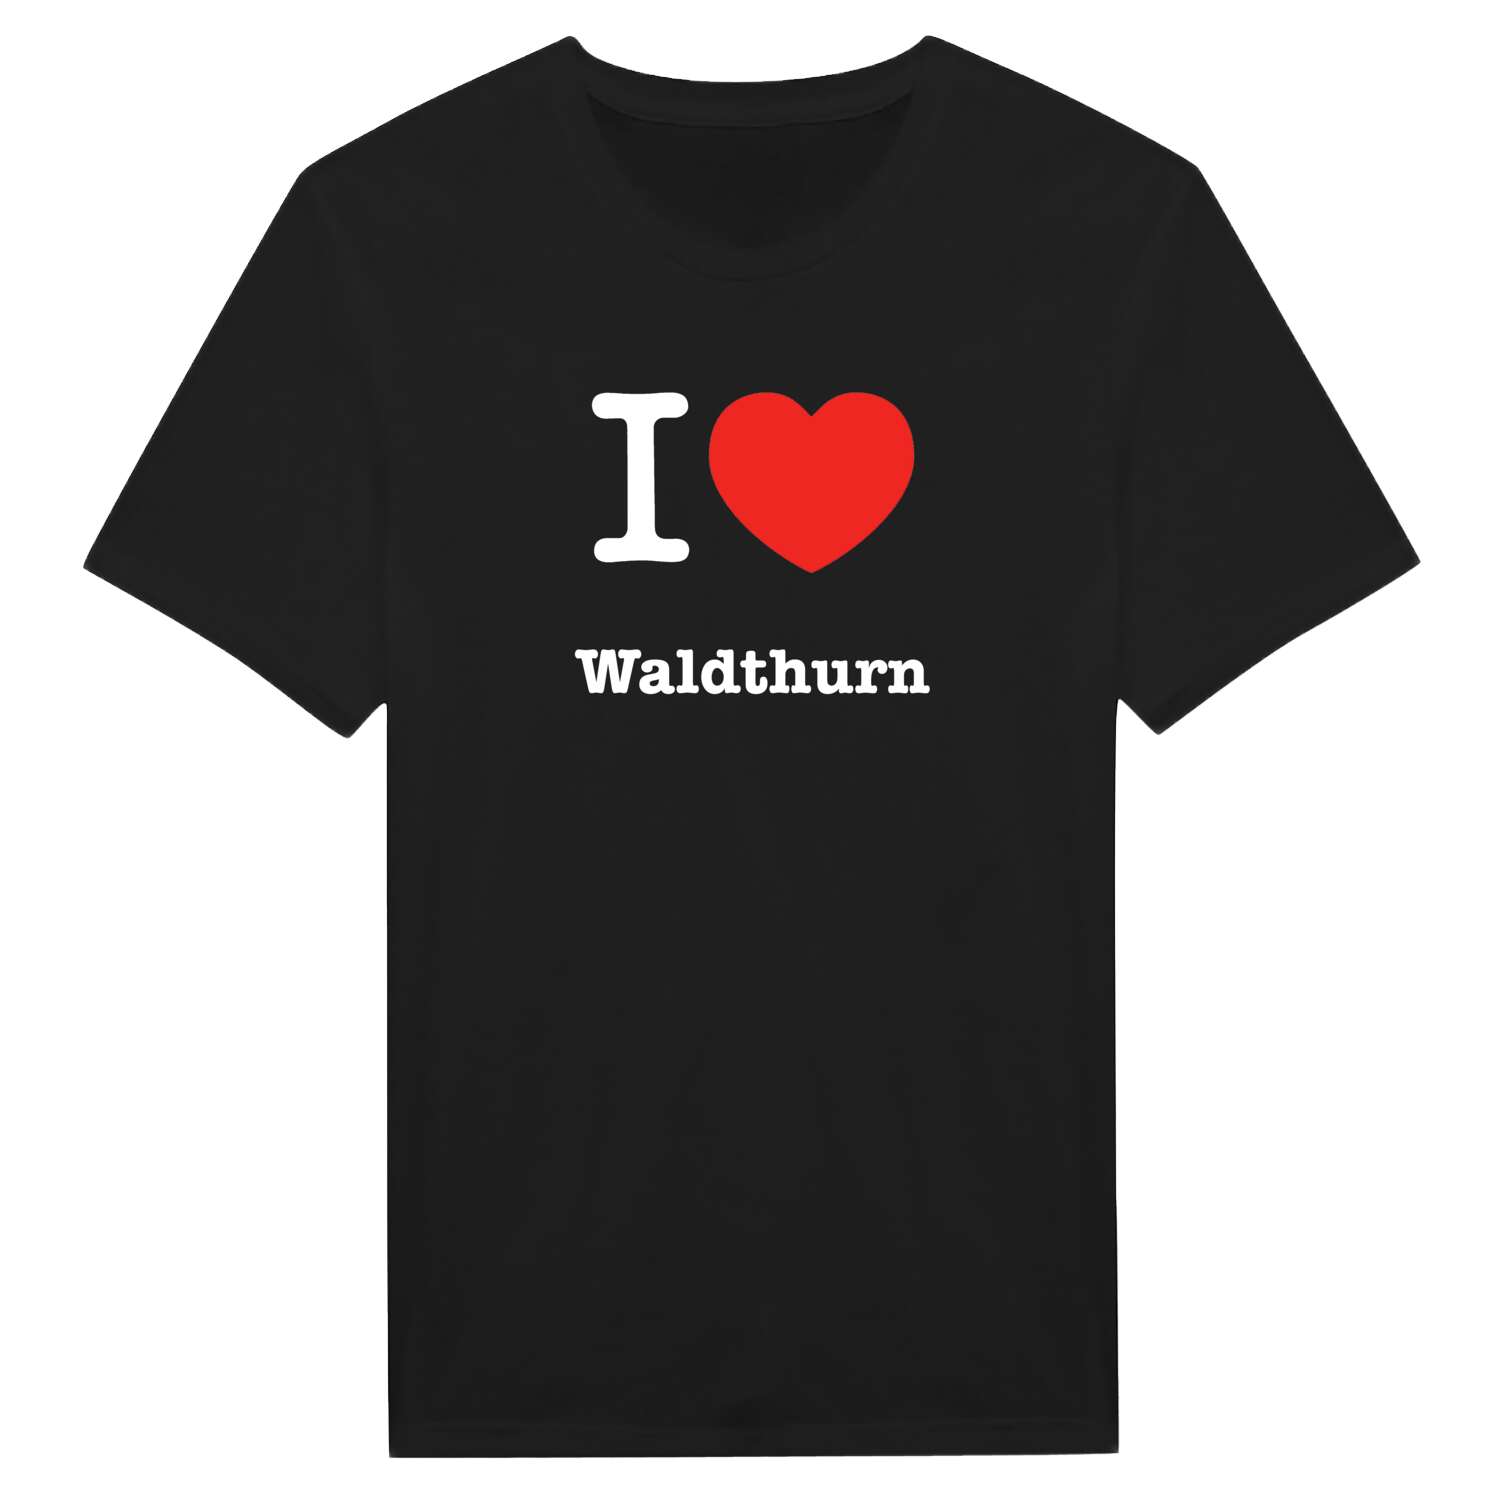 Waldthurn T-Shirt »I love«